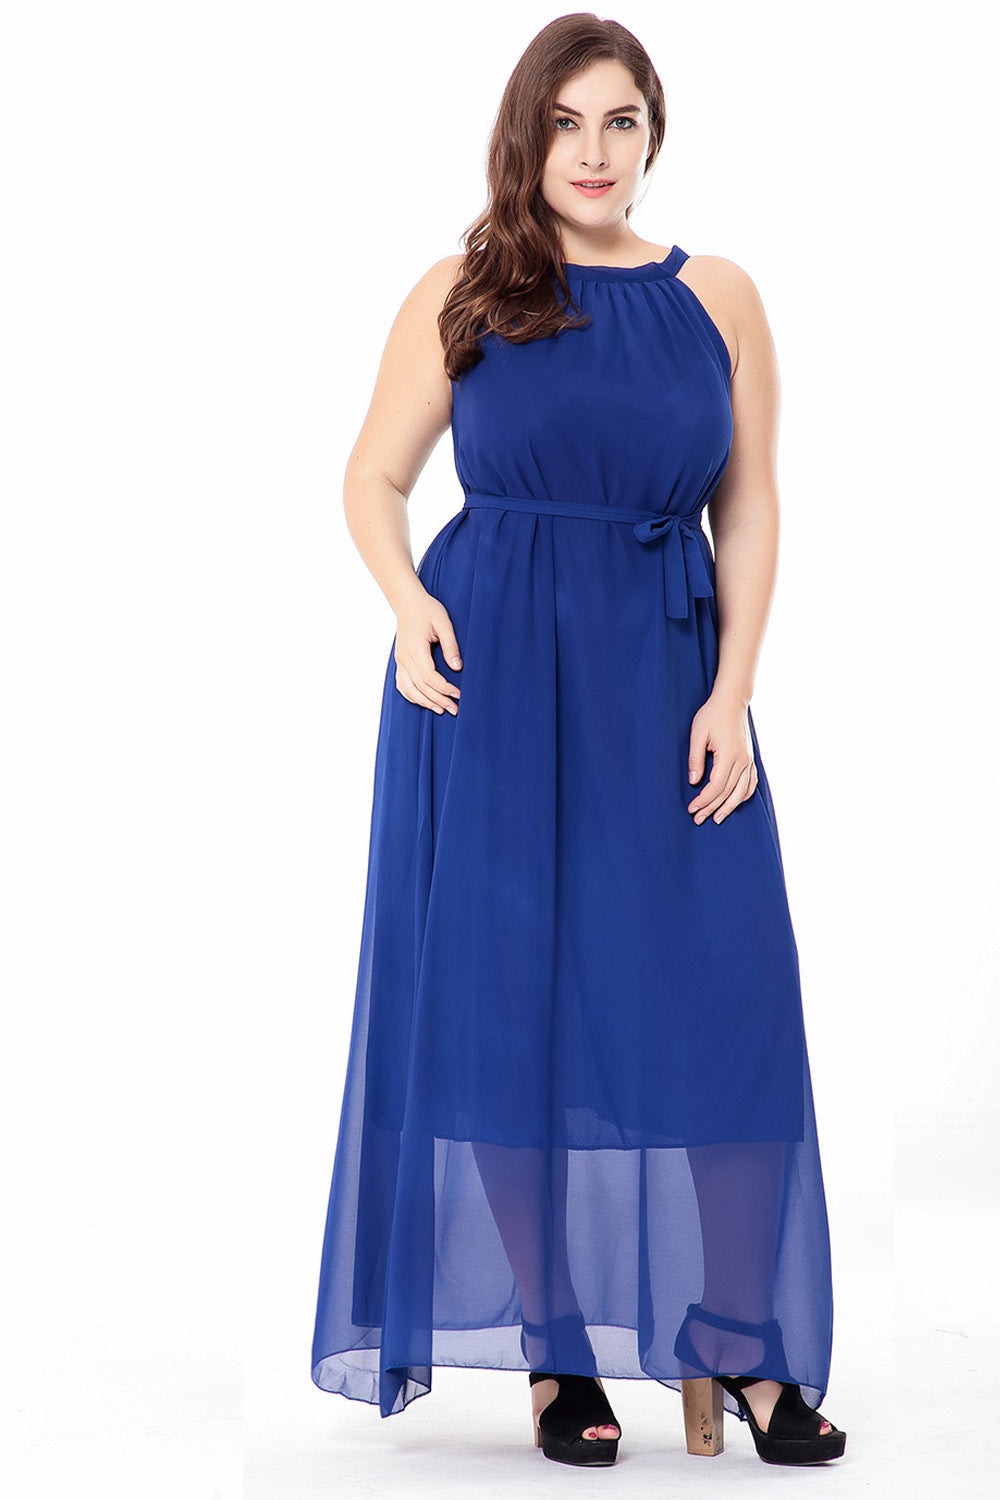 Summer Boho Plus Sizes Chiffon Dresses-Maxi Dresses-Dark Blue-L-US 12-Free Shipping at meselling99